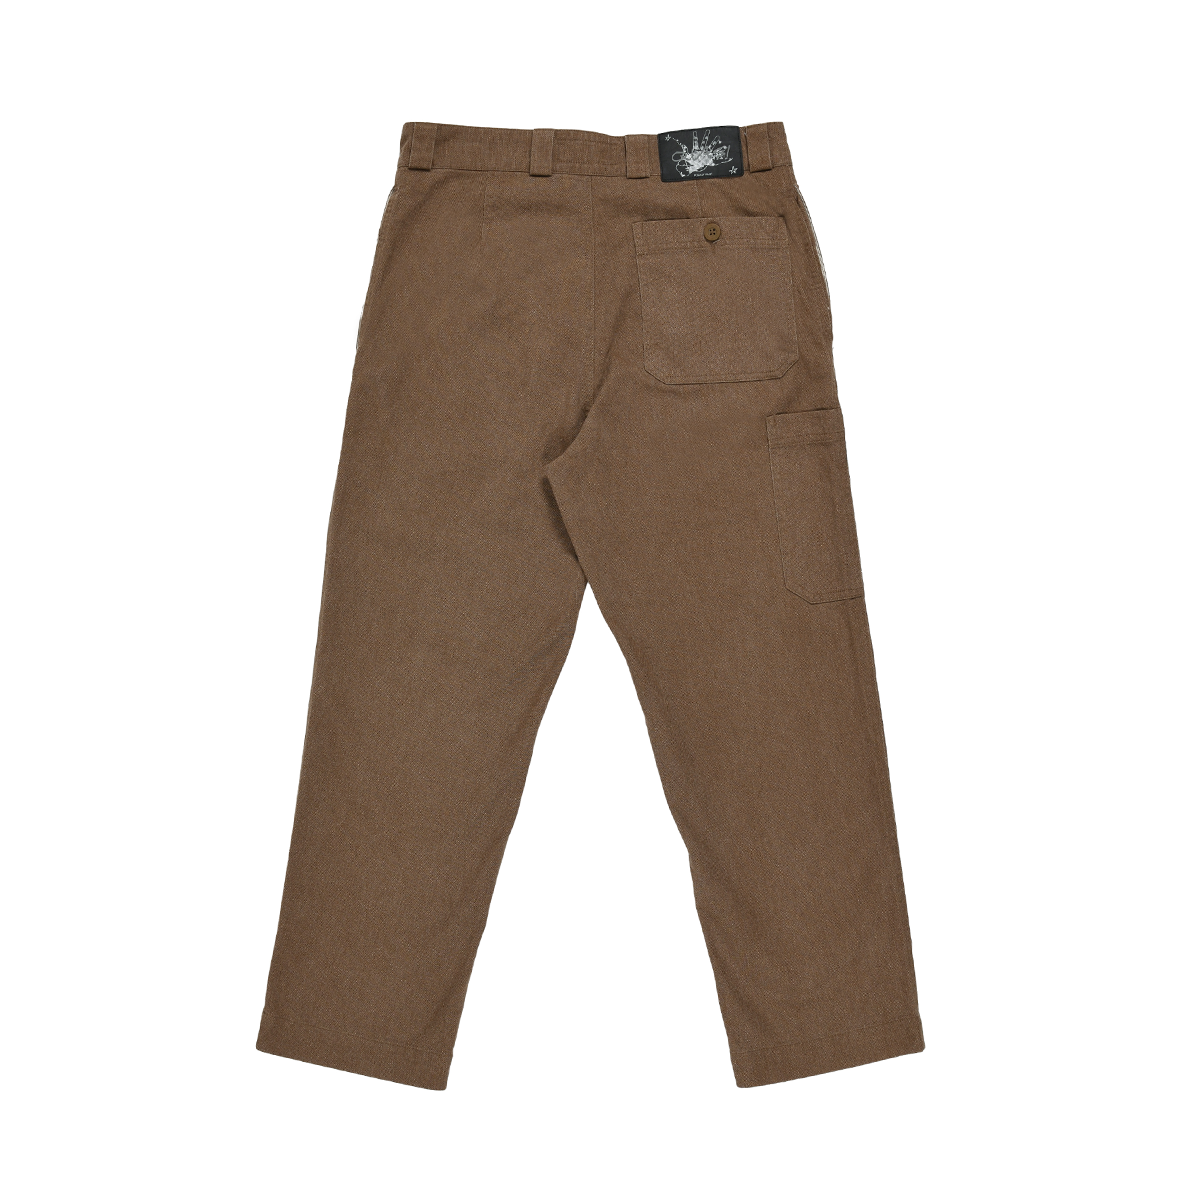 Quasi Pocket Pants - Umber